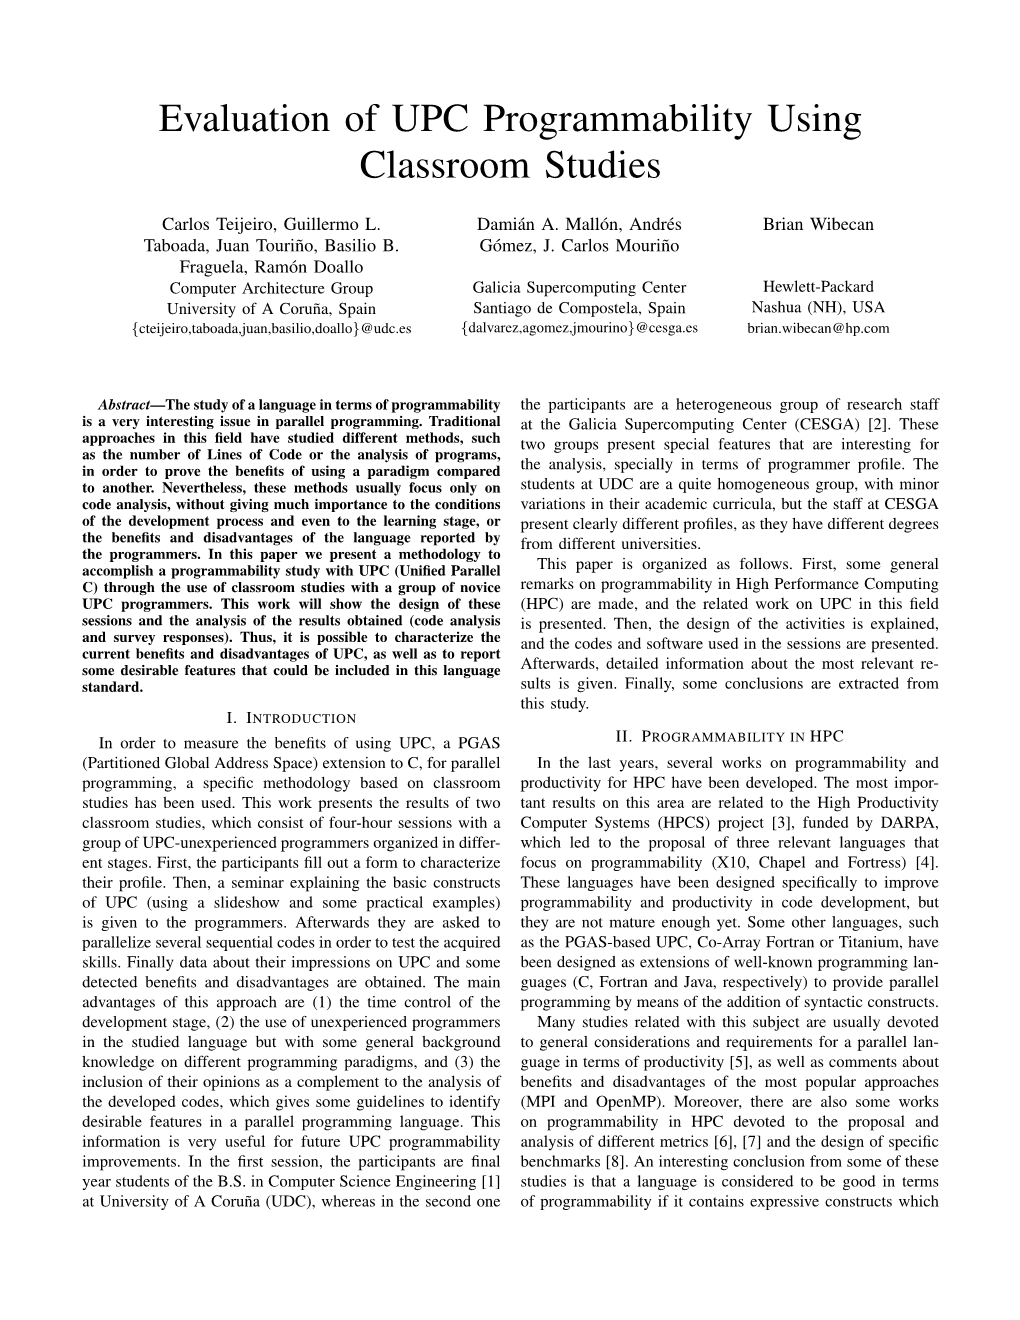 Evaluation of UPC Programmability Using Classroom Studies